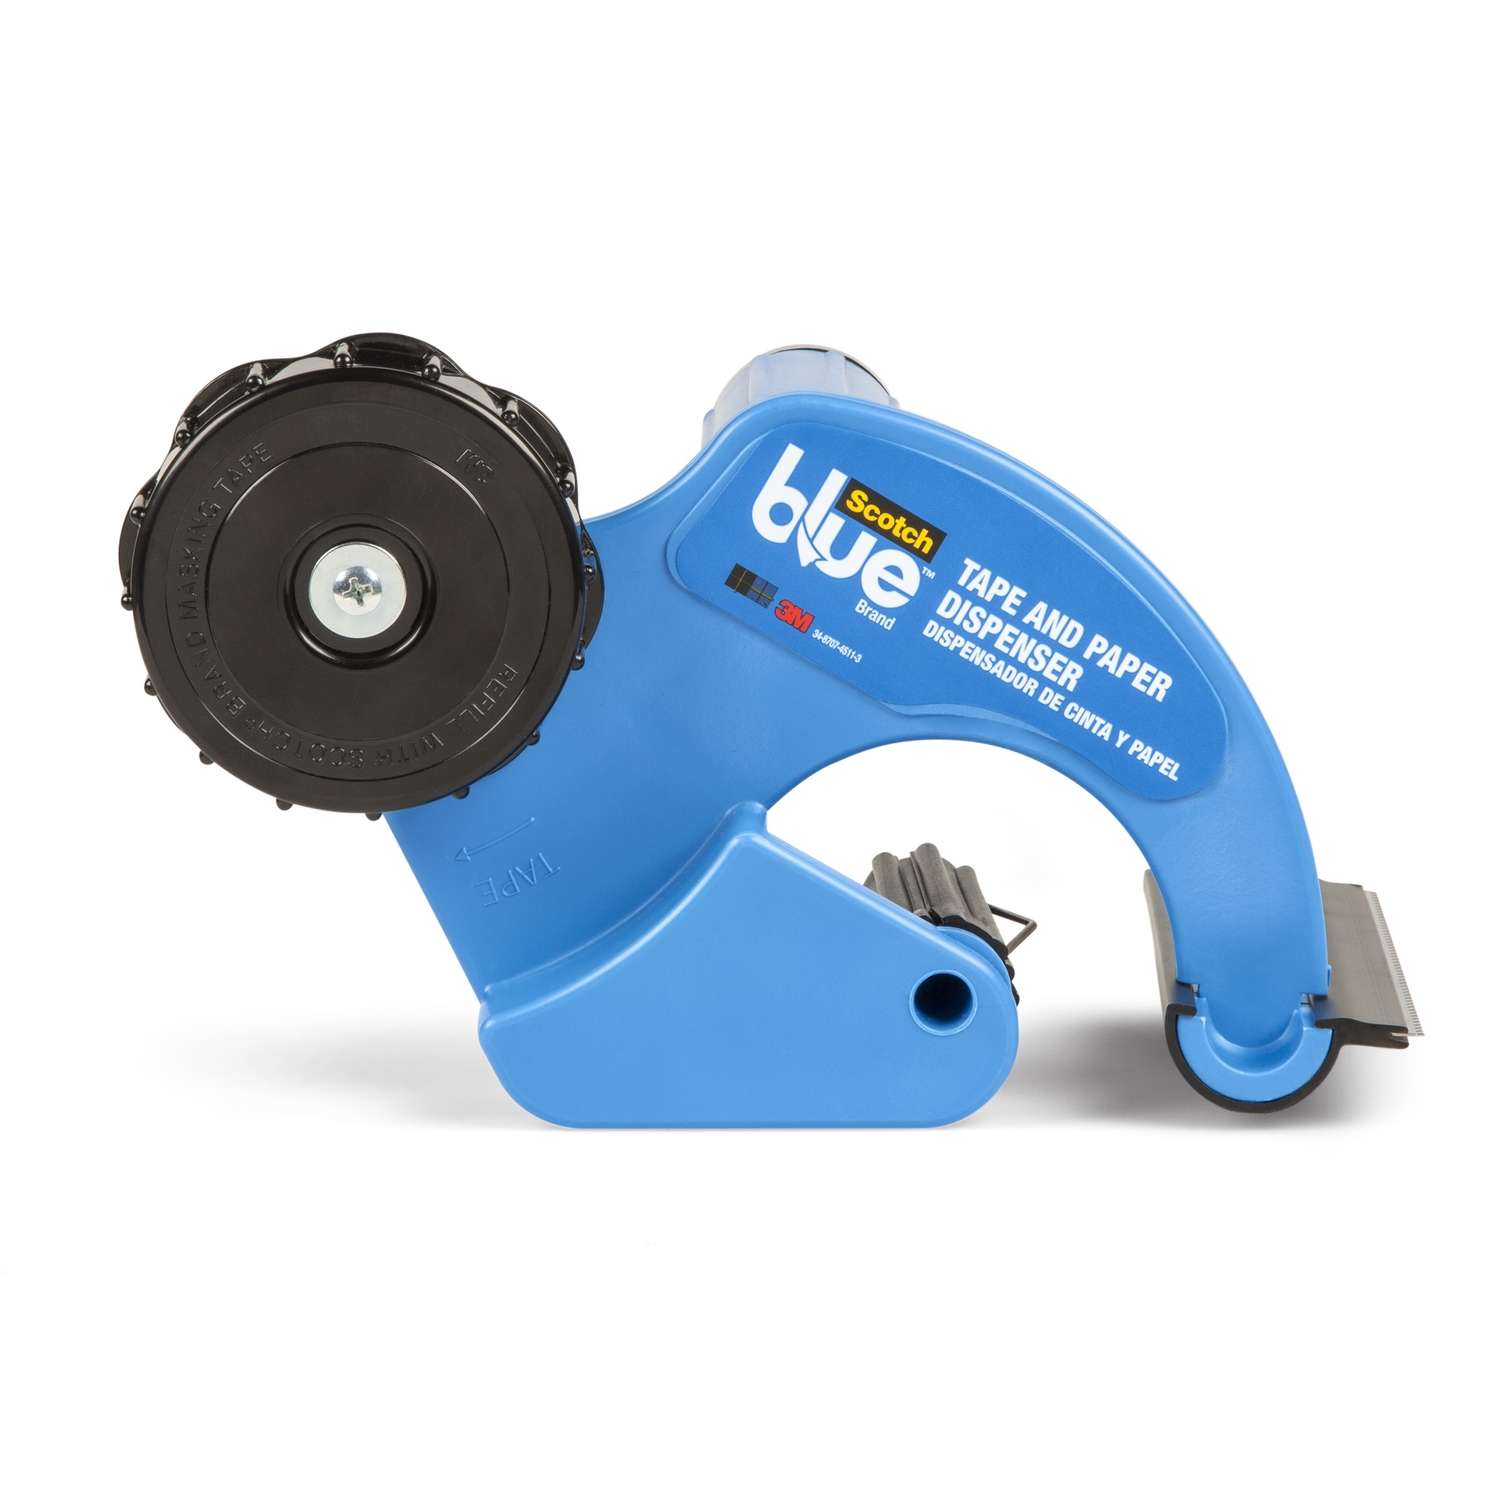 3M Safe-Release Blue Tape Applicator Masking Tape Dispenser at